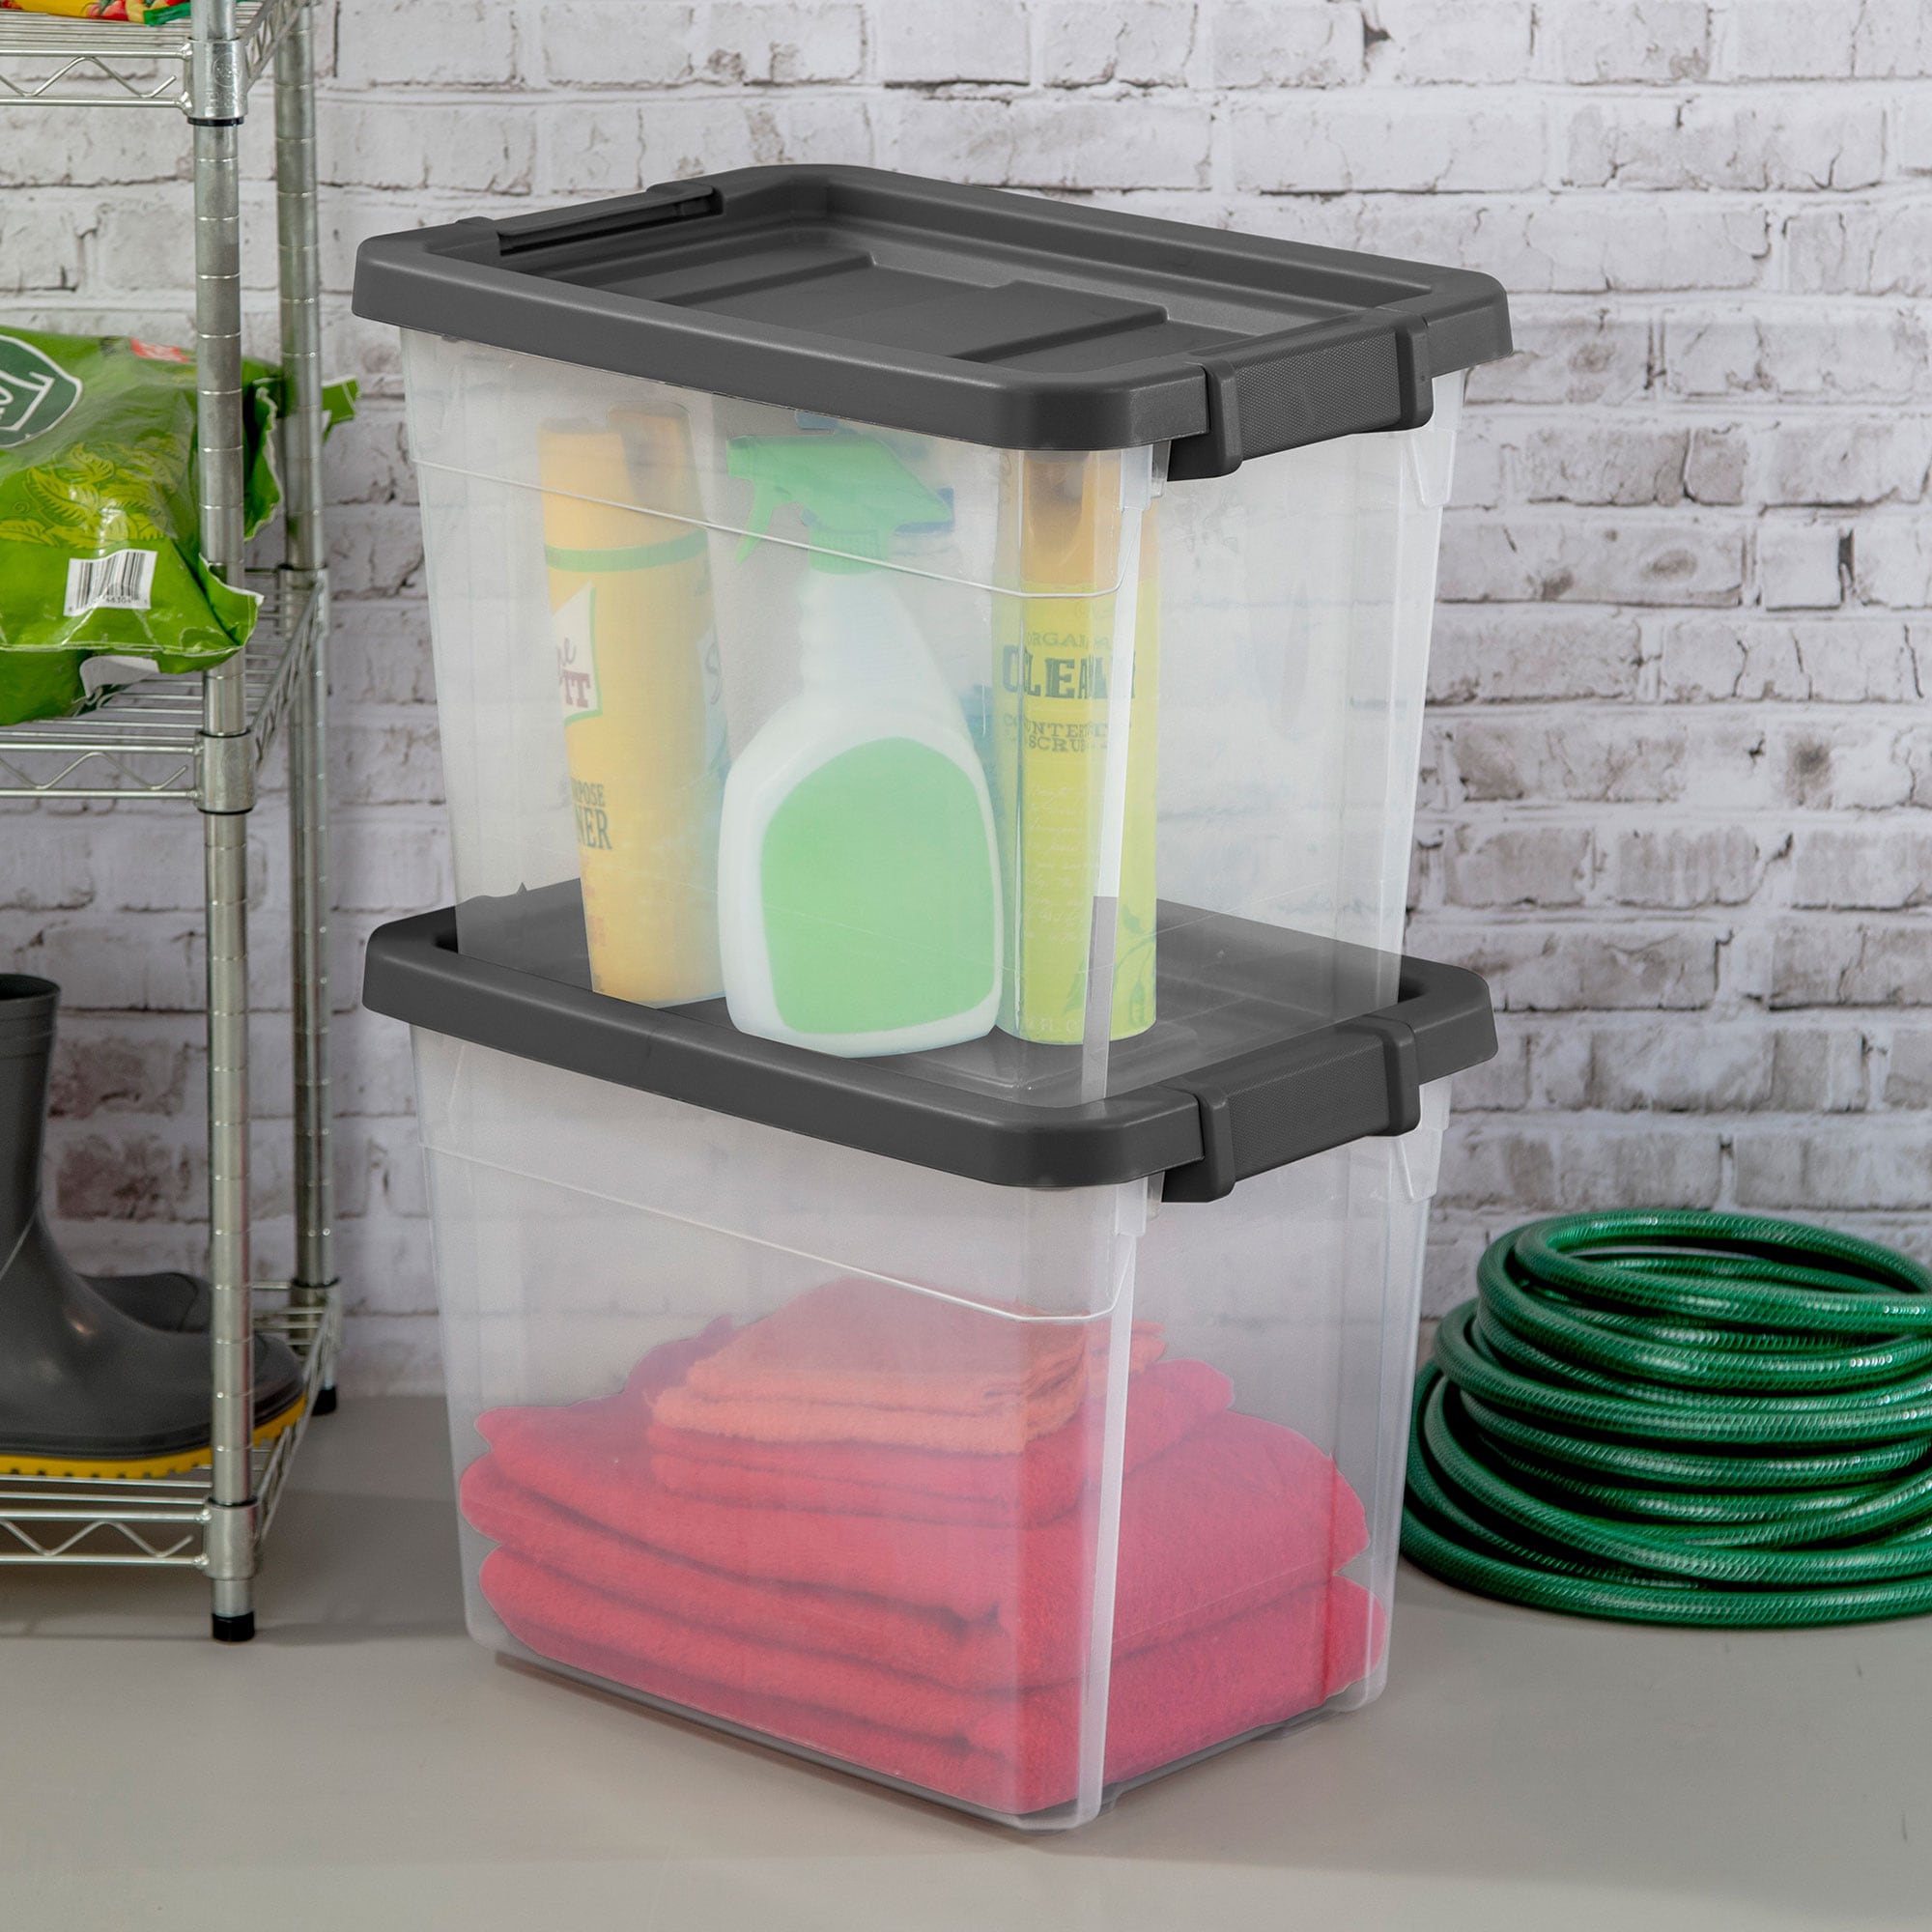 Sterilite 7.5 Quart Clear Plastic Home Storage Box with Latching